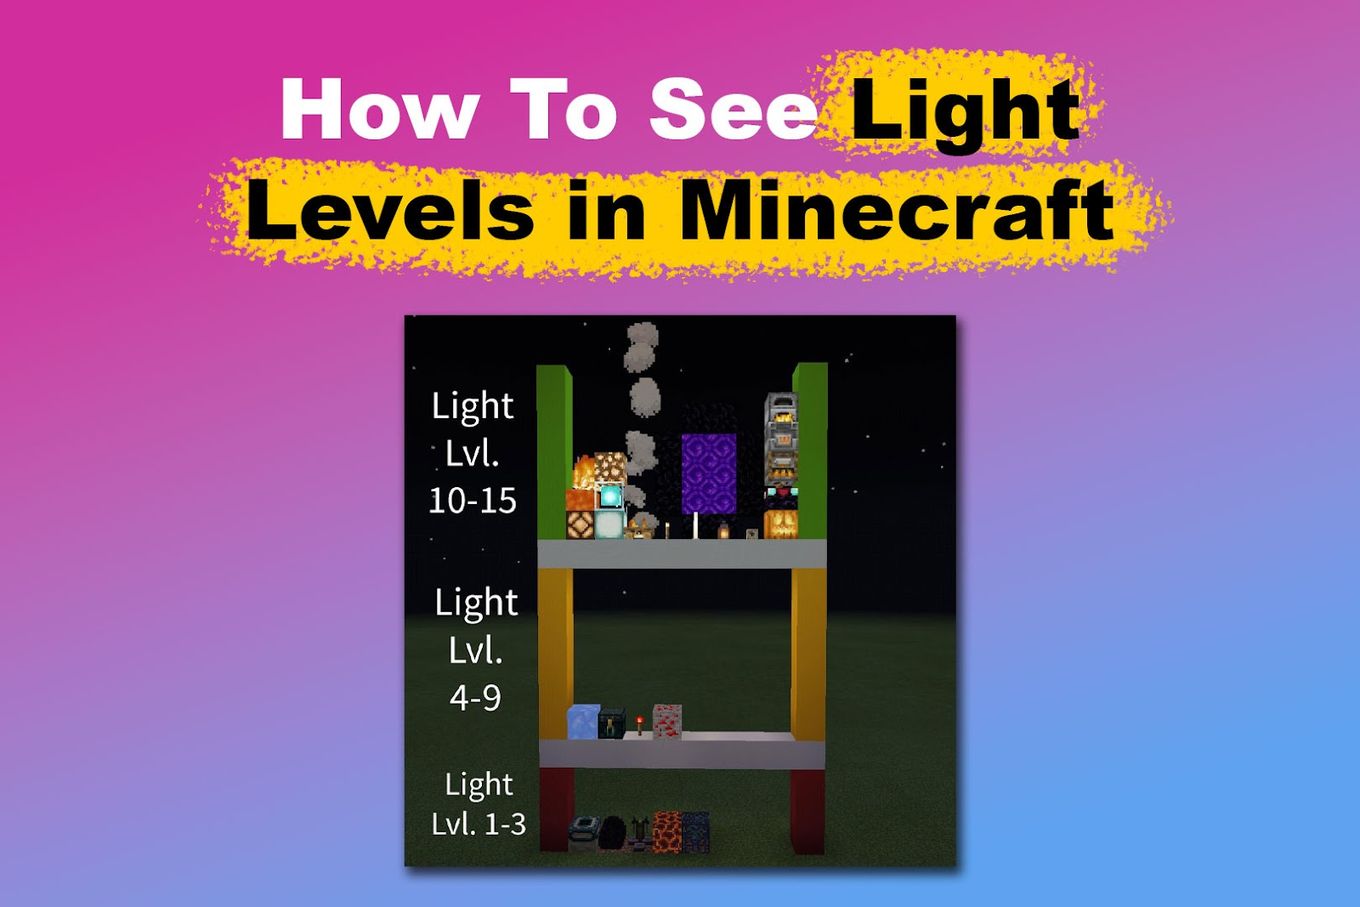 List of All Light Source Blocks in Minecraft (2024)